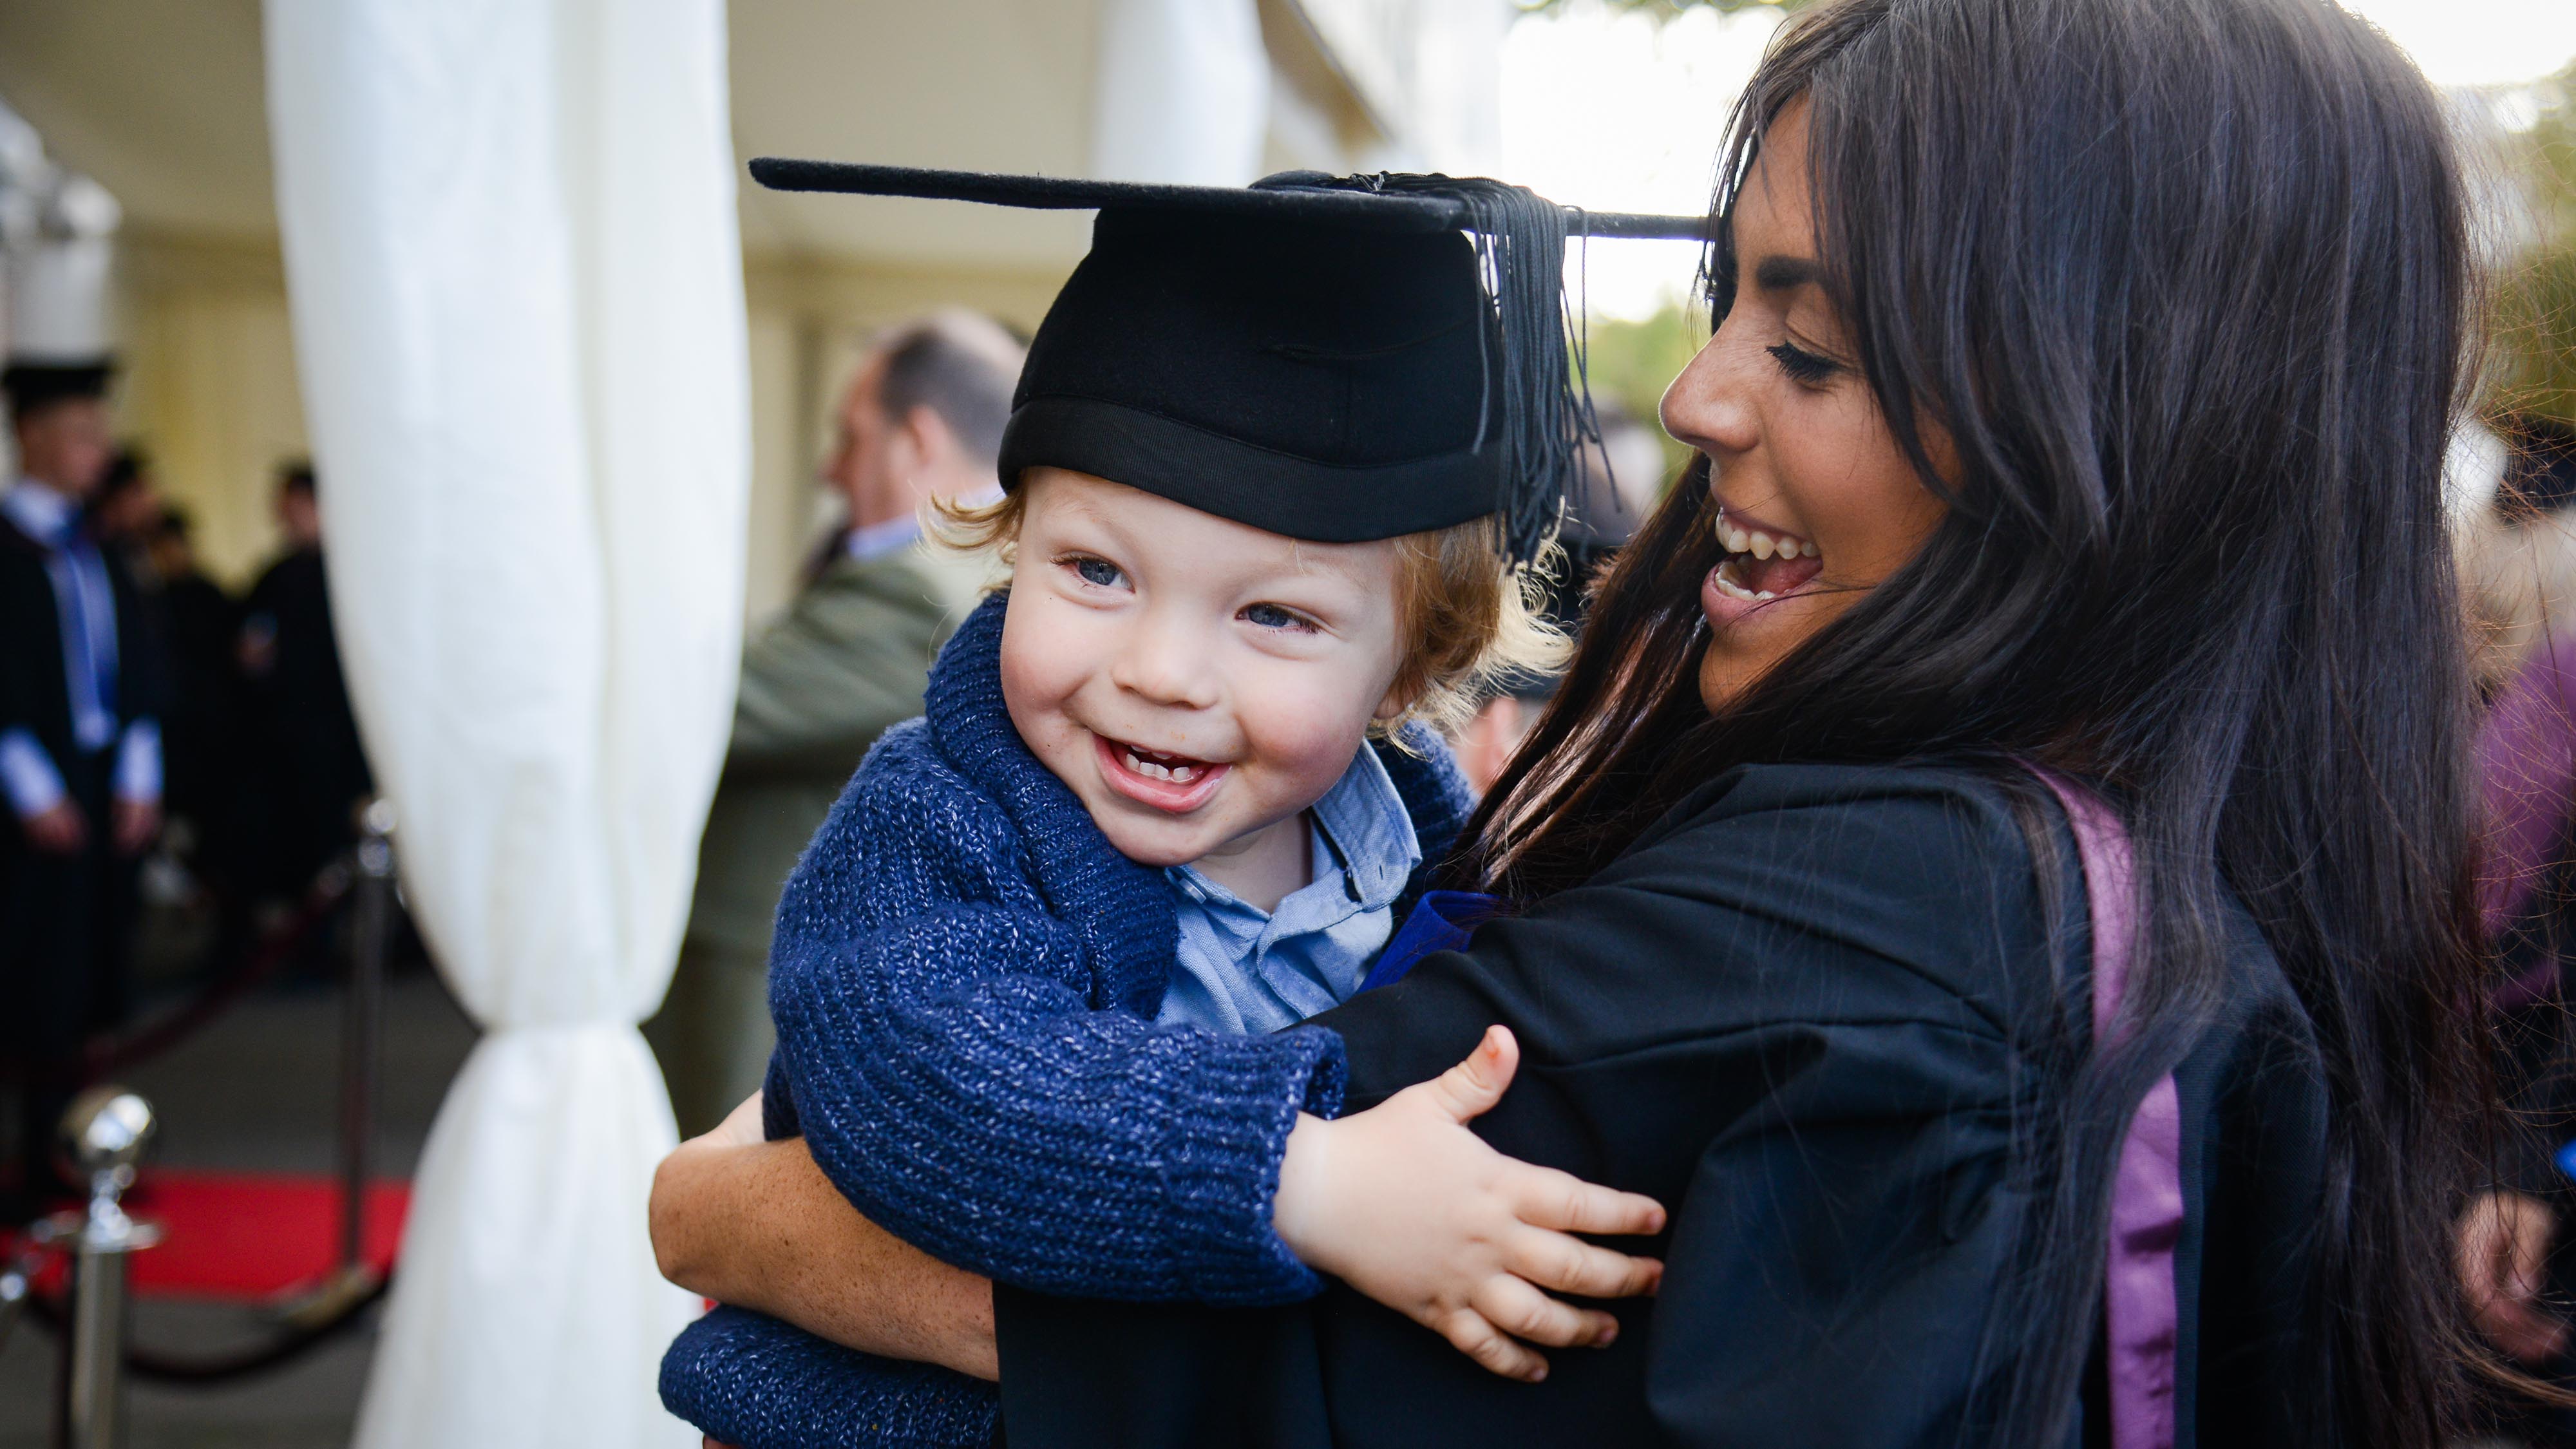 Child wears a graduation cap